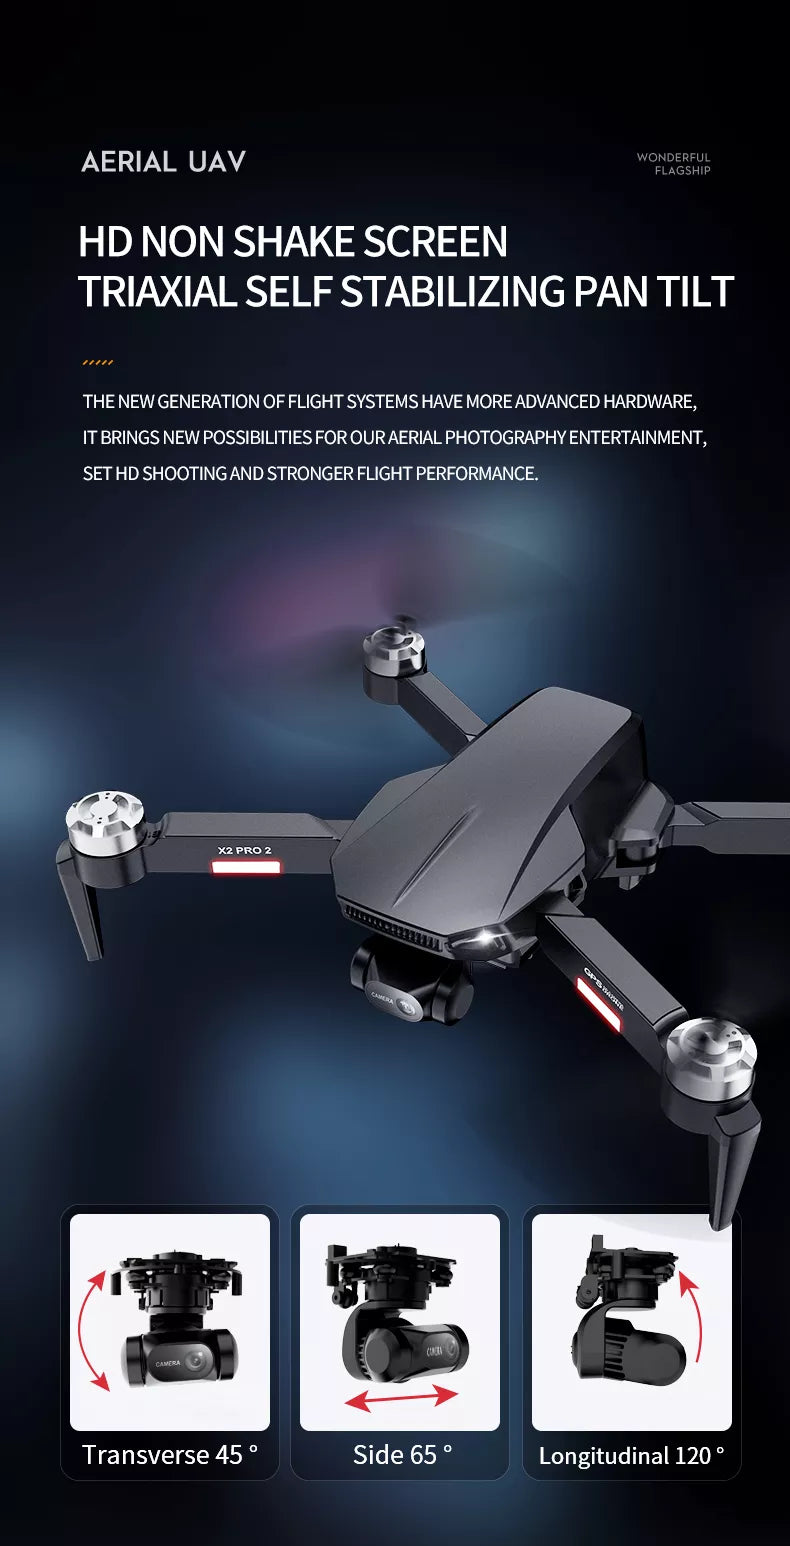 X2 Pro3 Drone, AERIAL UAV WONDGSHUP HD NON SHAKE SCREEN T